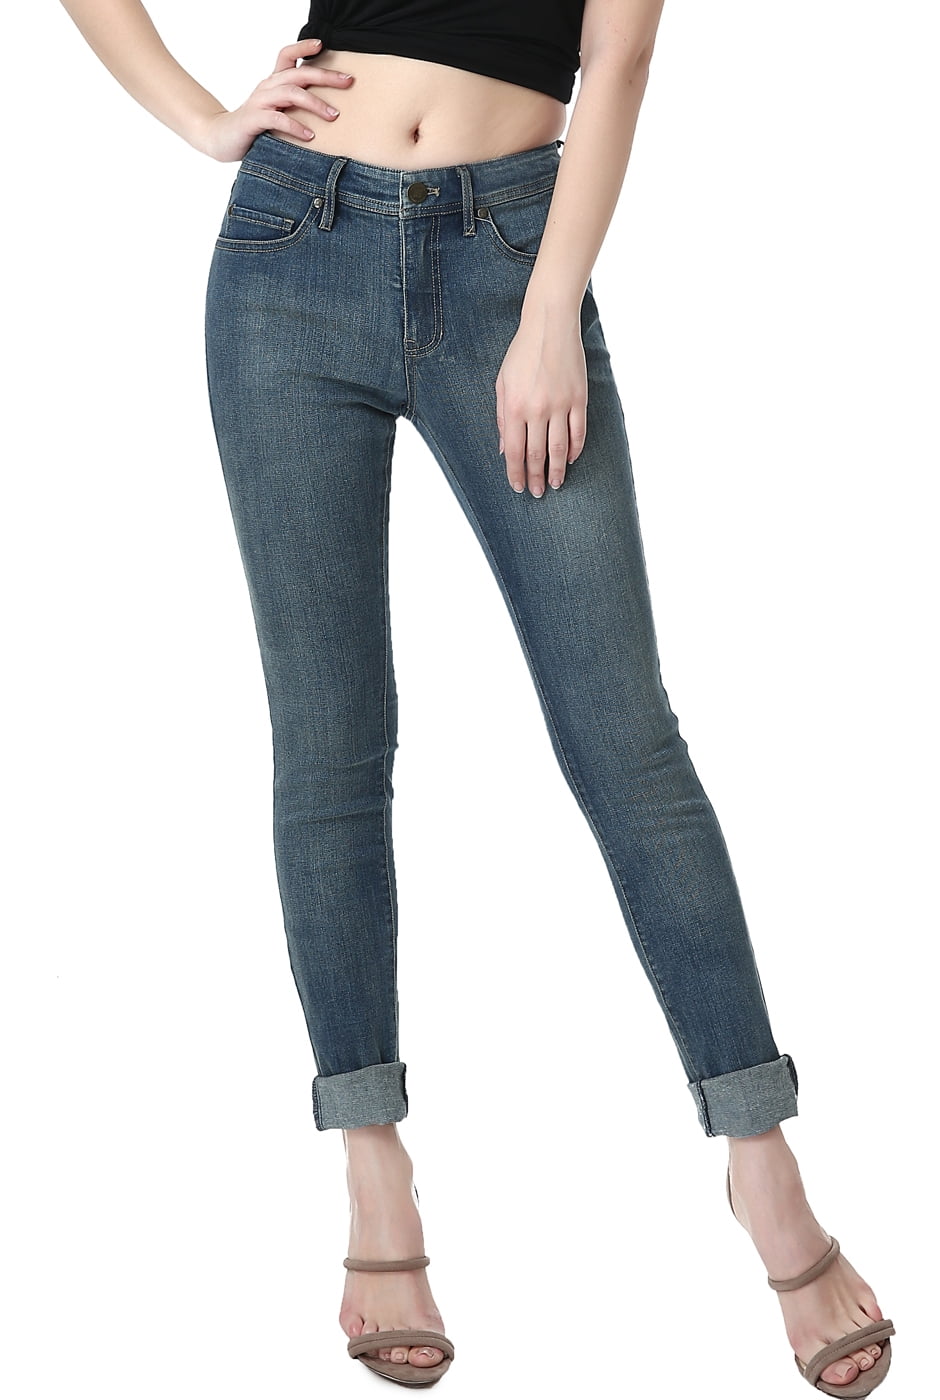 Phistic - Women's Ultra Stretch Medium Indigo Skinny Jeans - Walmart ...